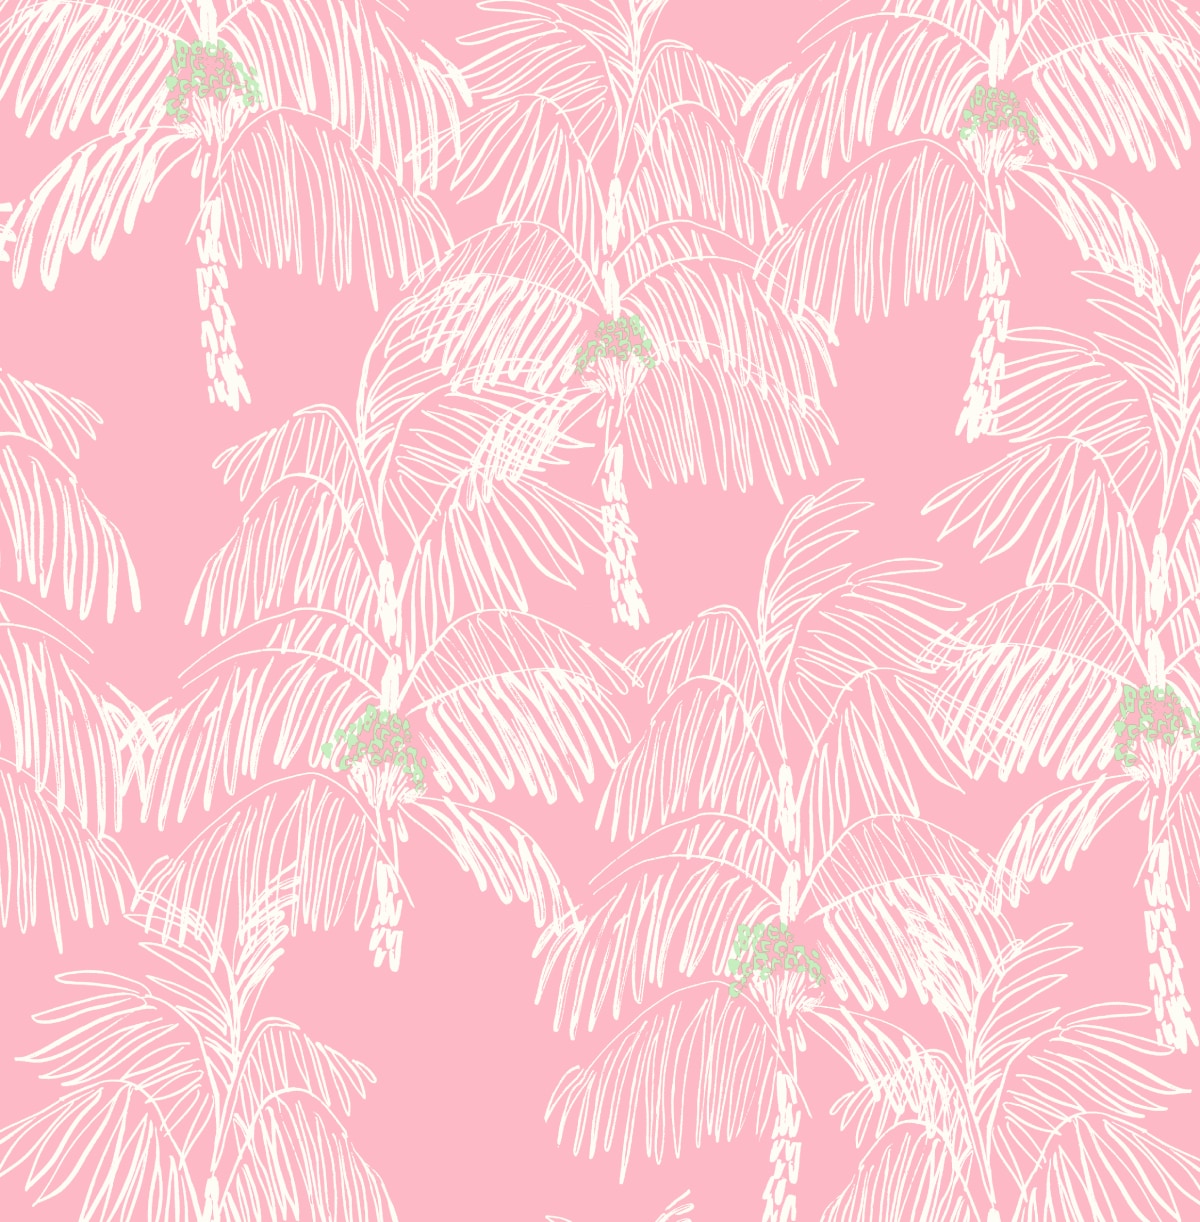 Plain pink wallpaper 303219 › Buy at best price!